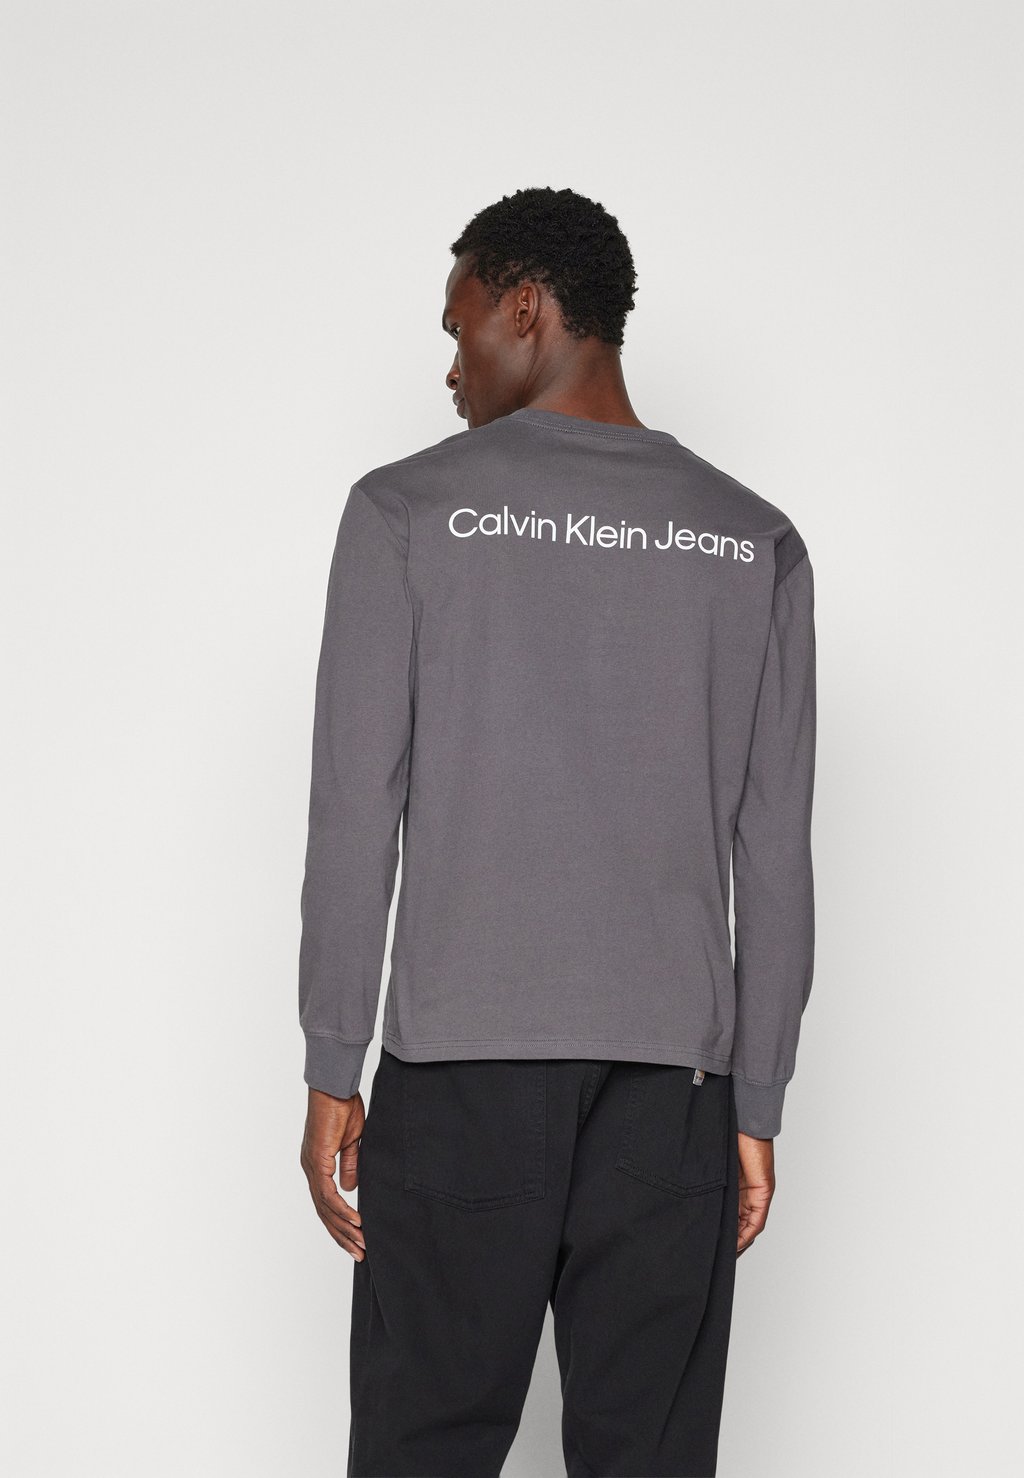 Футболка с длинным рукавом Institutional Graphic Tee Calvin Klein Jeans, цвет dark grey